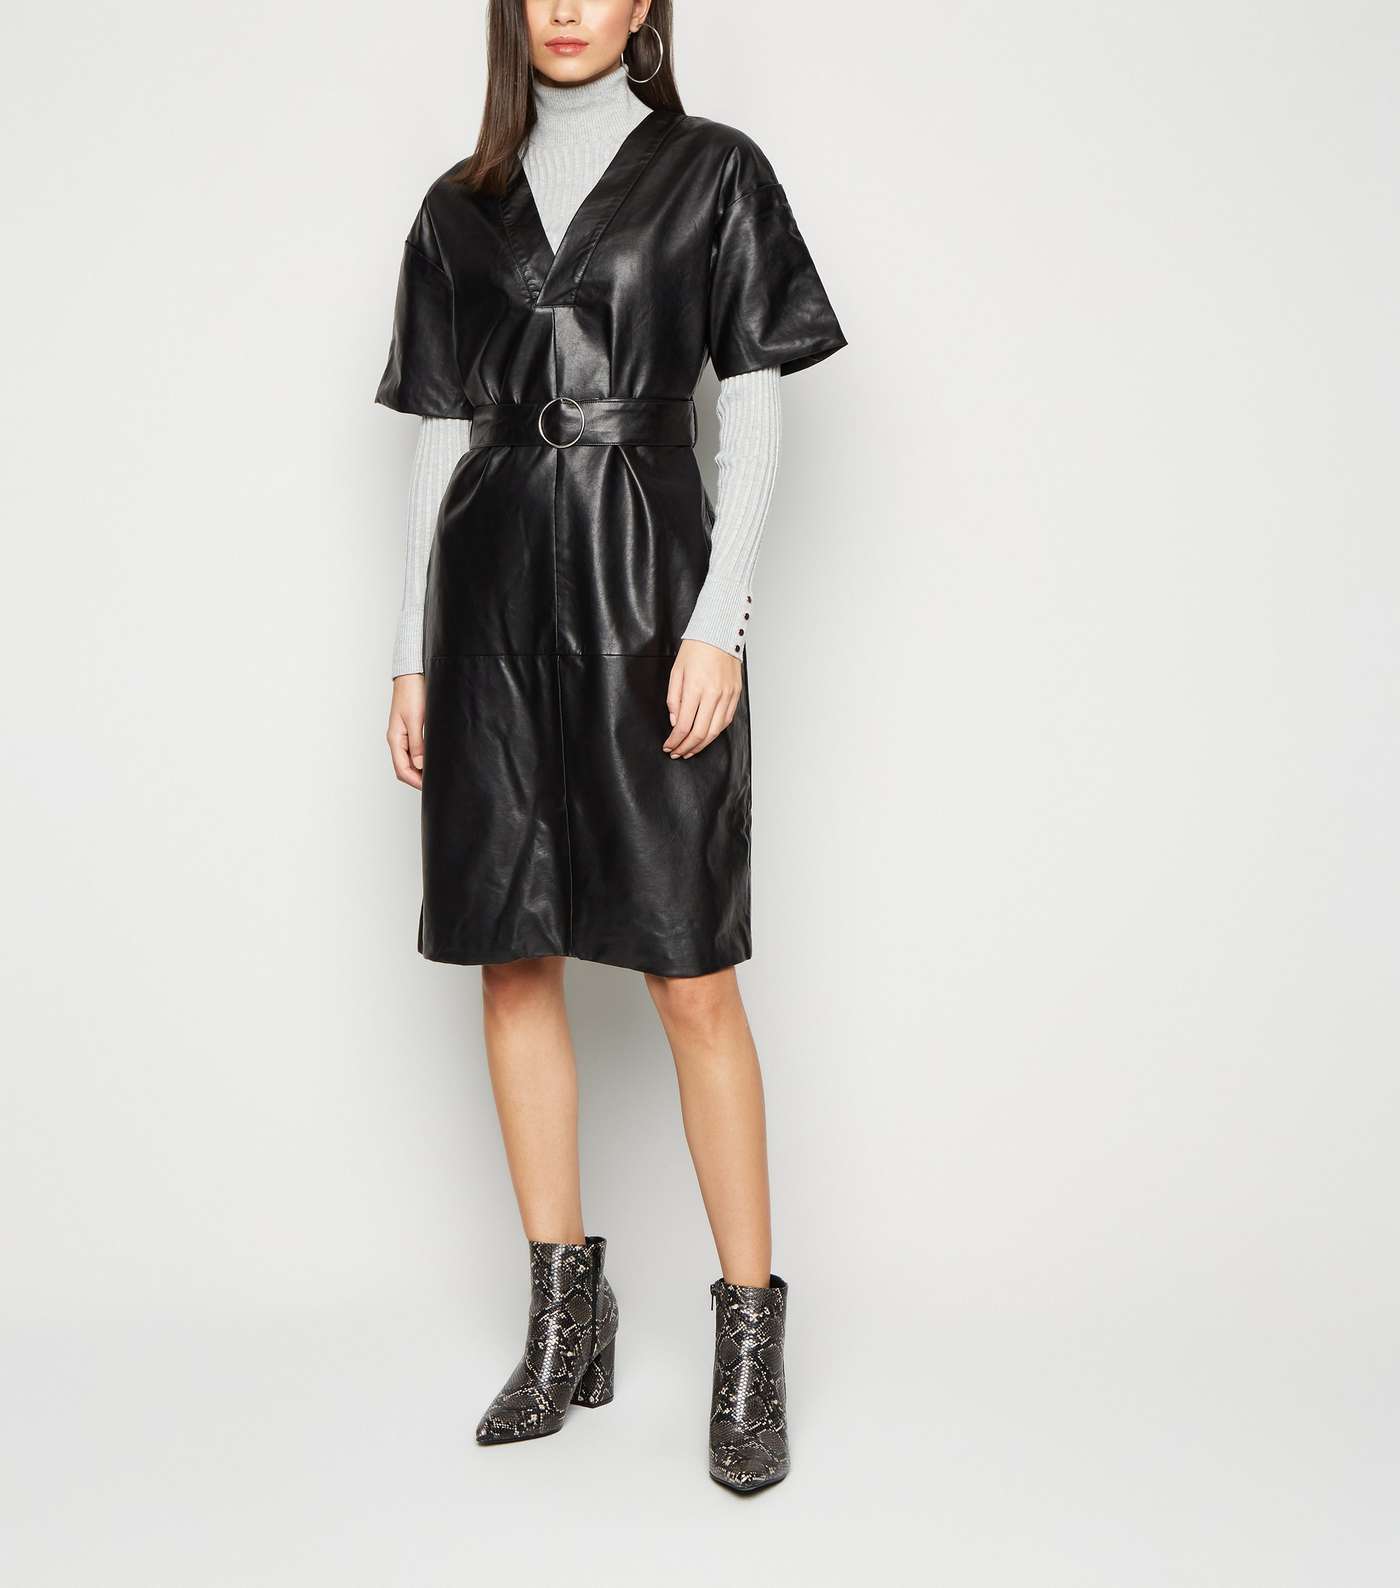 NA-KD Black Coated Leather-Look Belted Dress Image 2